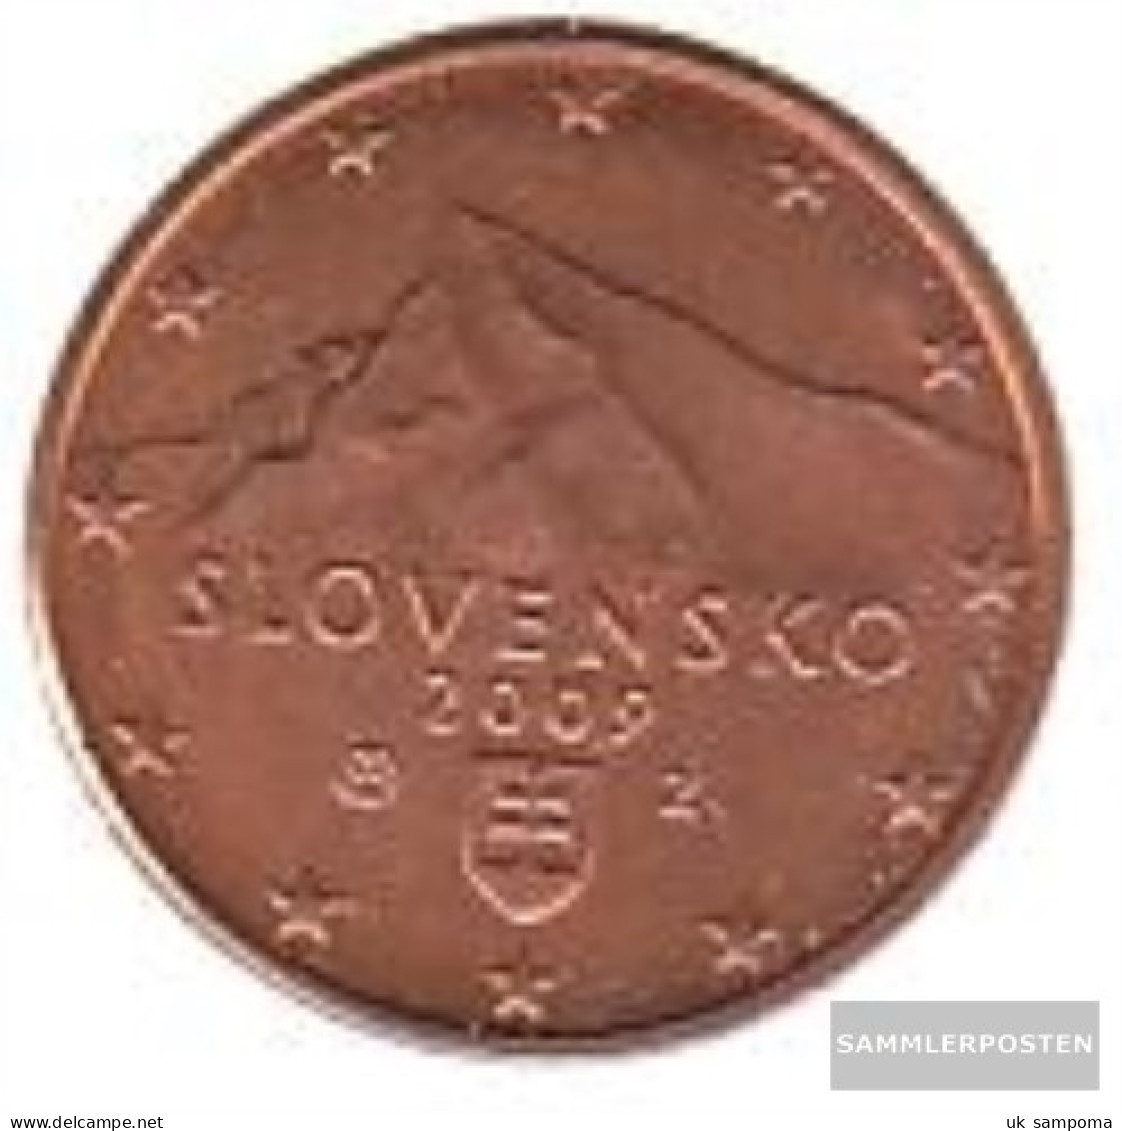 Slovakia Sk 1 2009 Stgl./unzirkuliert Stgl./unzirkuliert 2009 Kursmünze 1 Cent - Slovacchia